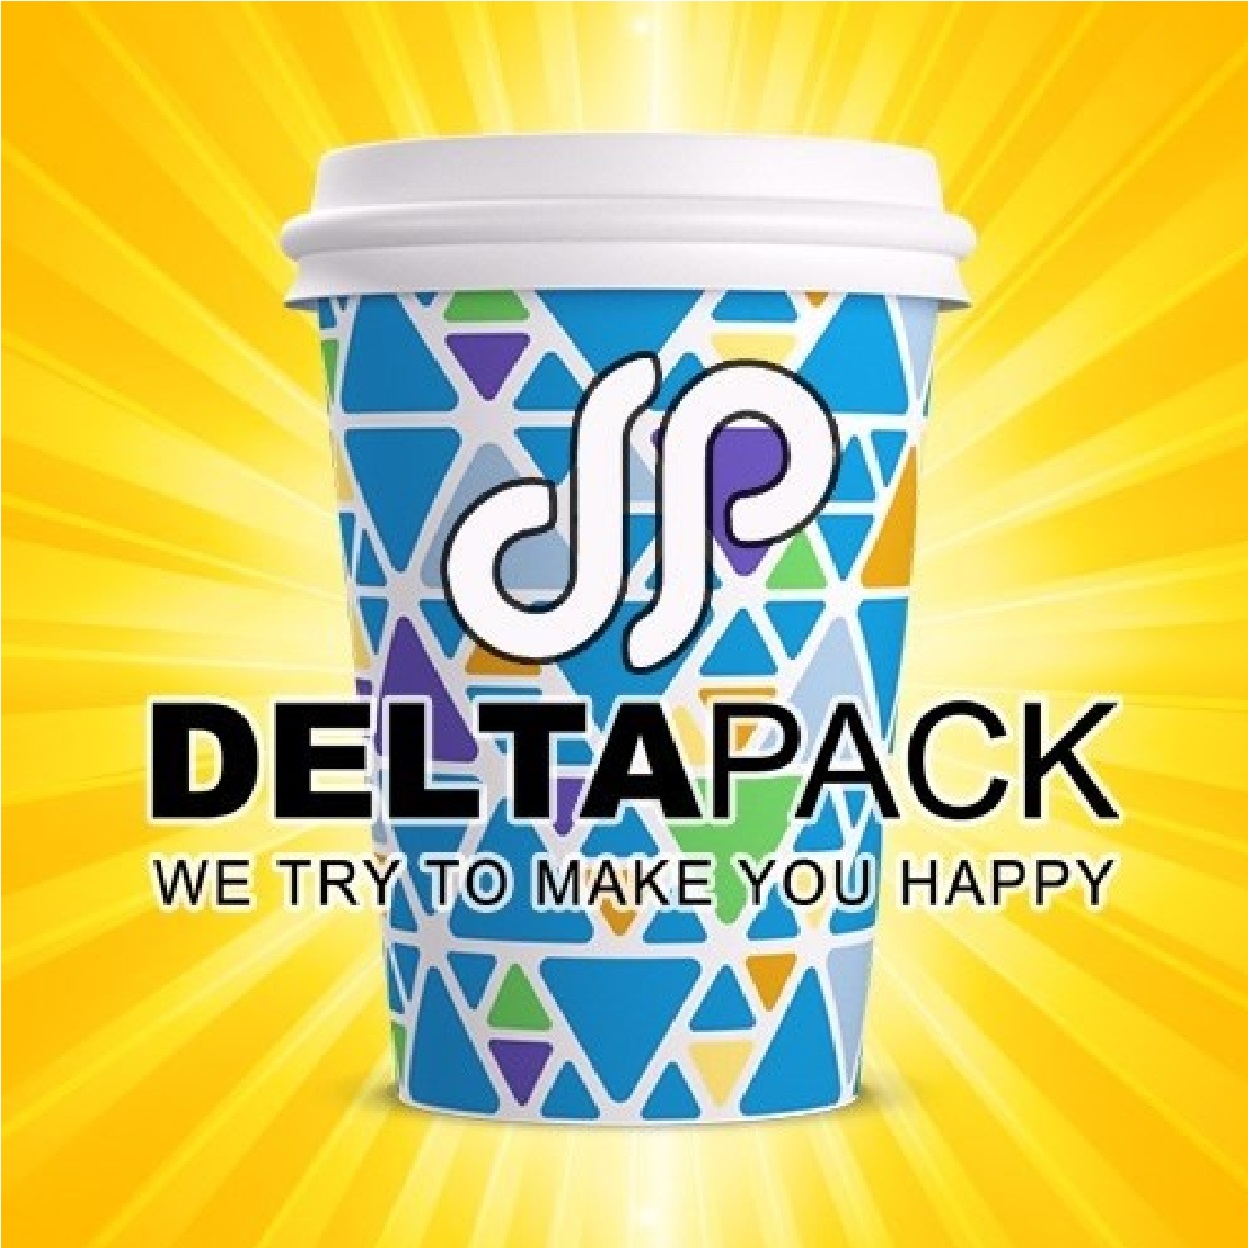 Delta Pack